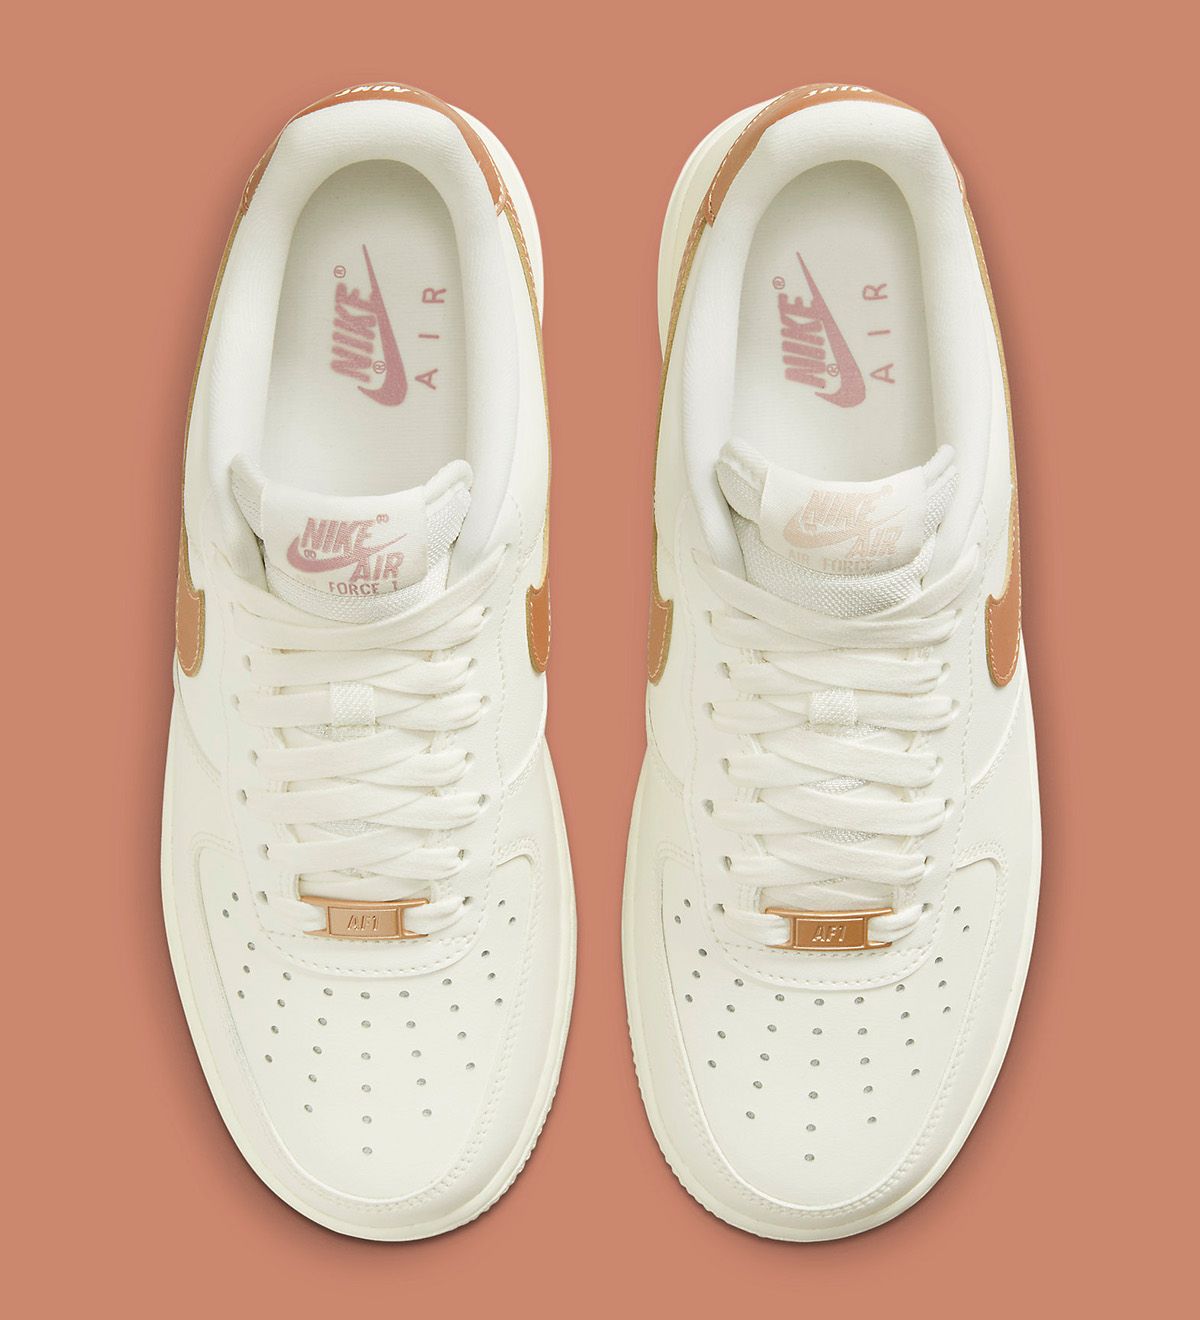 The Nike Air Force 1 Glistens in 'Rose Gold' - Sneaker Freaker